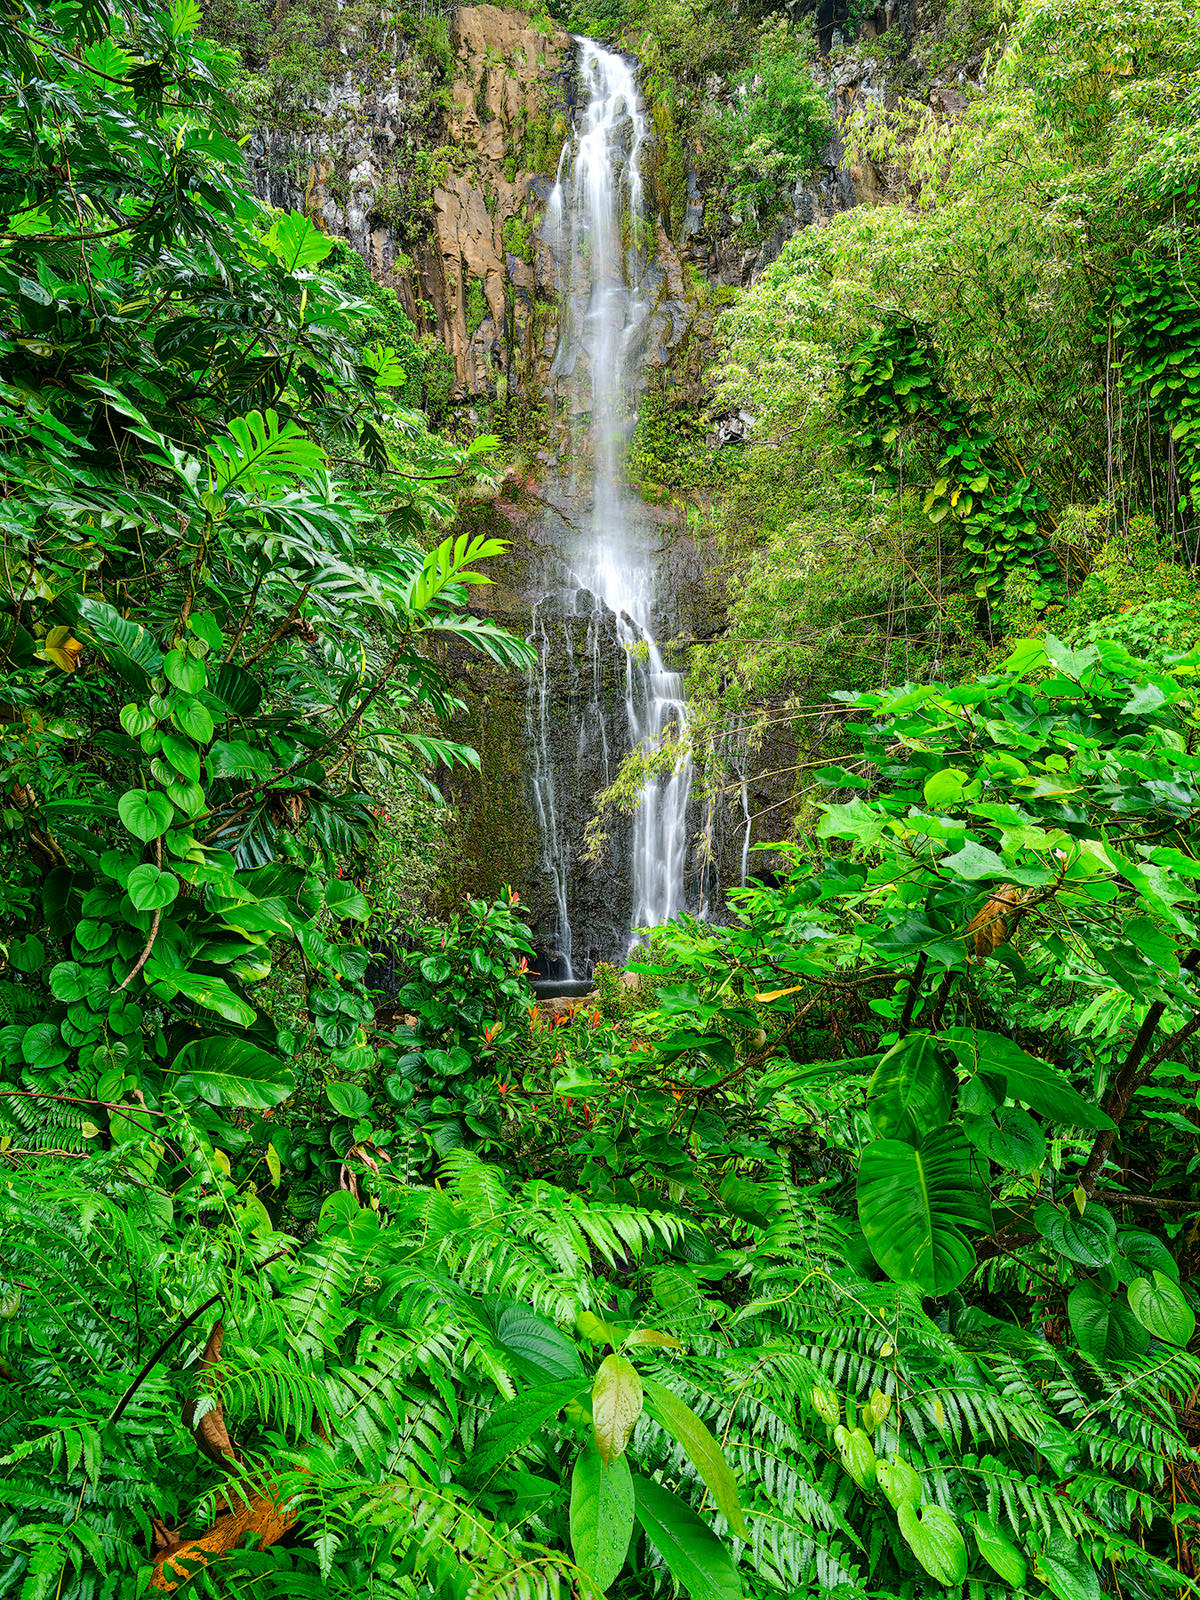 vertical image of Wailua Falls surrounded by lush green foliage near Hana on the island of Maui Hawaii